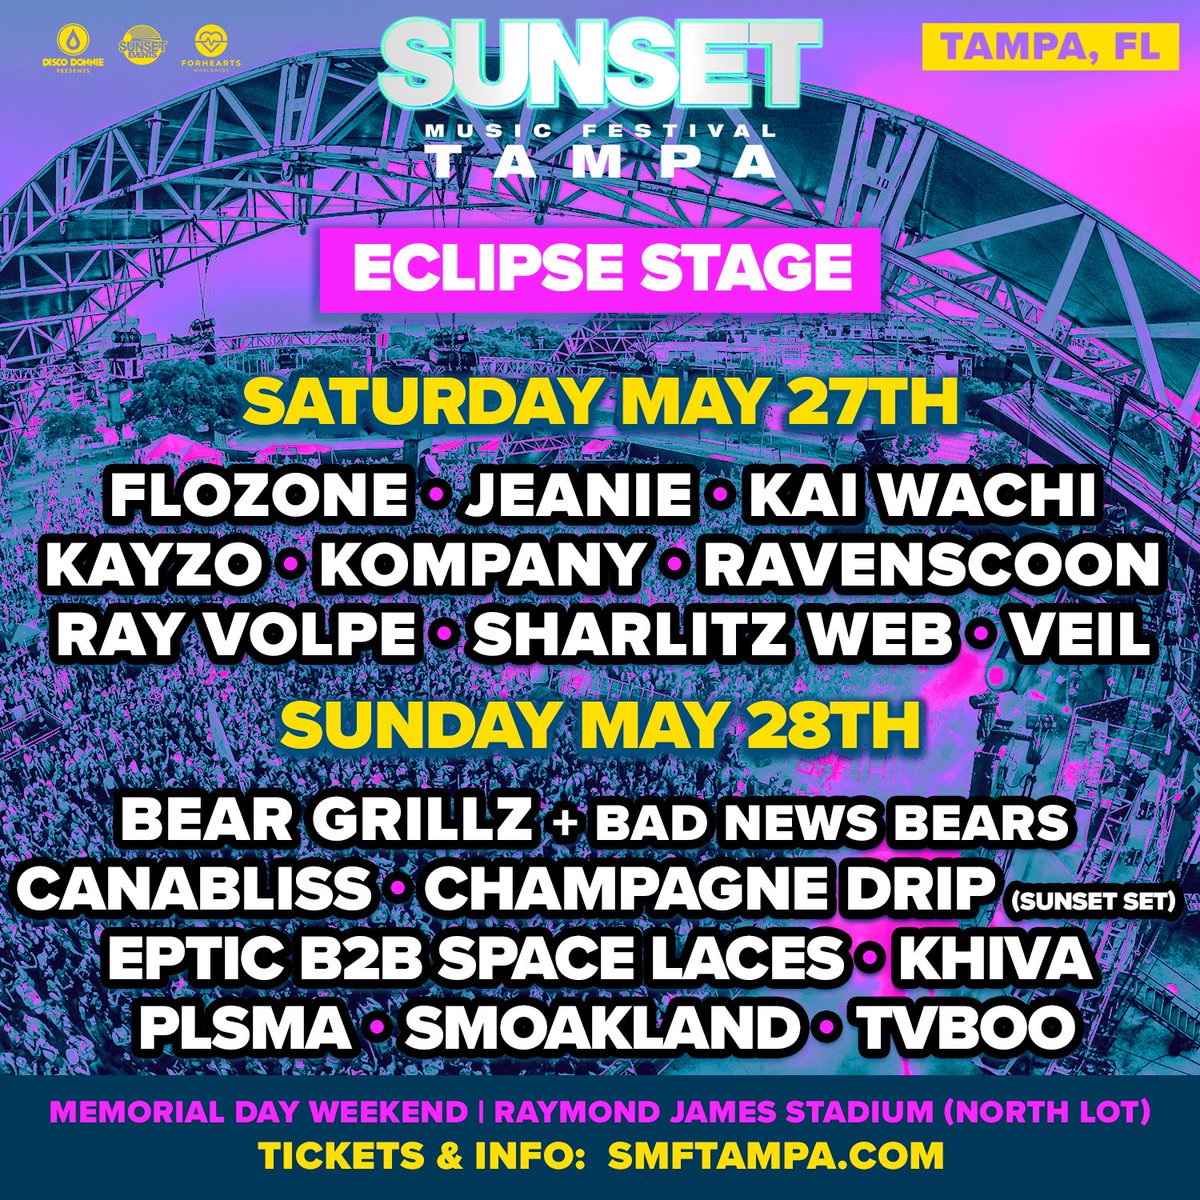 Sunset Music Festival lineup